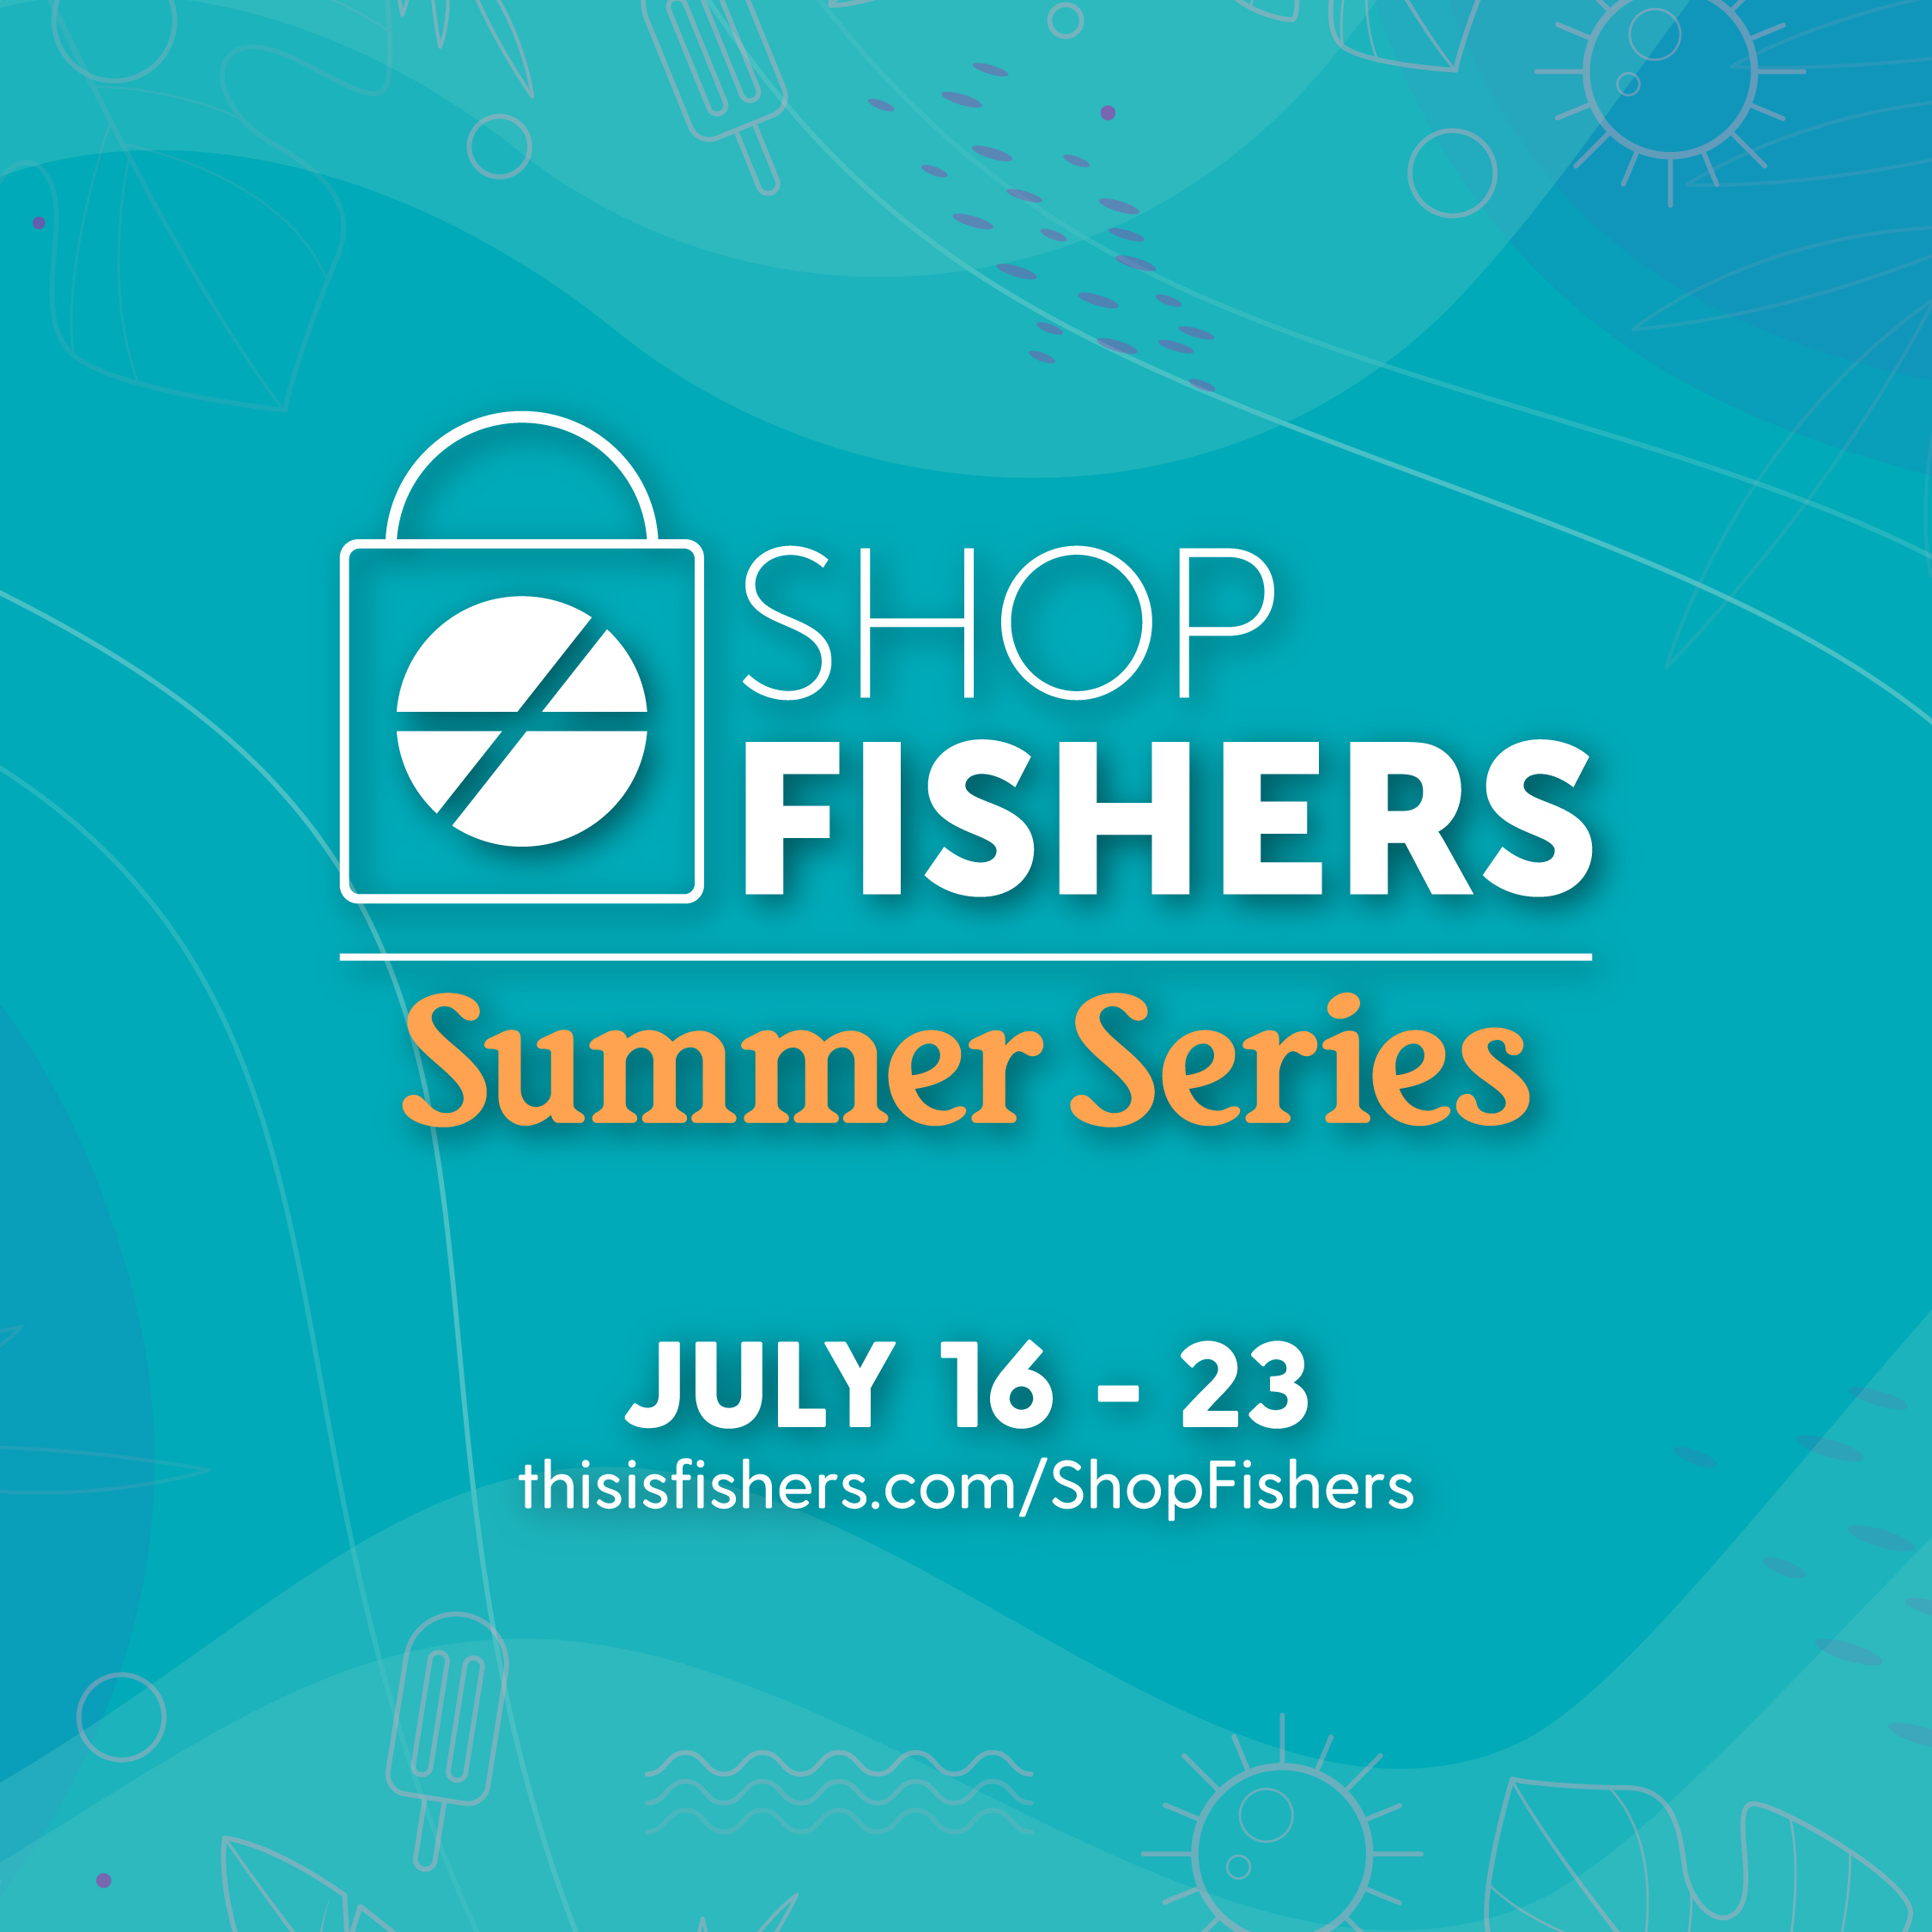 Shop Fishers Summer Series July 16 - 23 thisisfishers.com/shopfishers